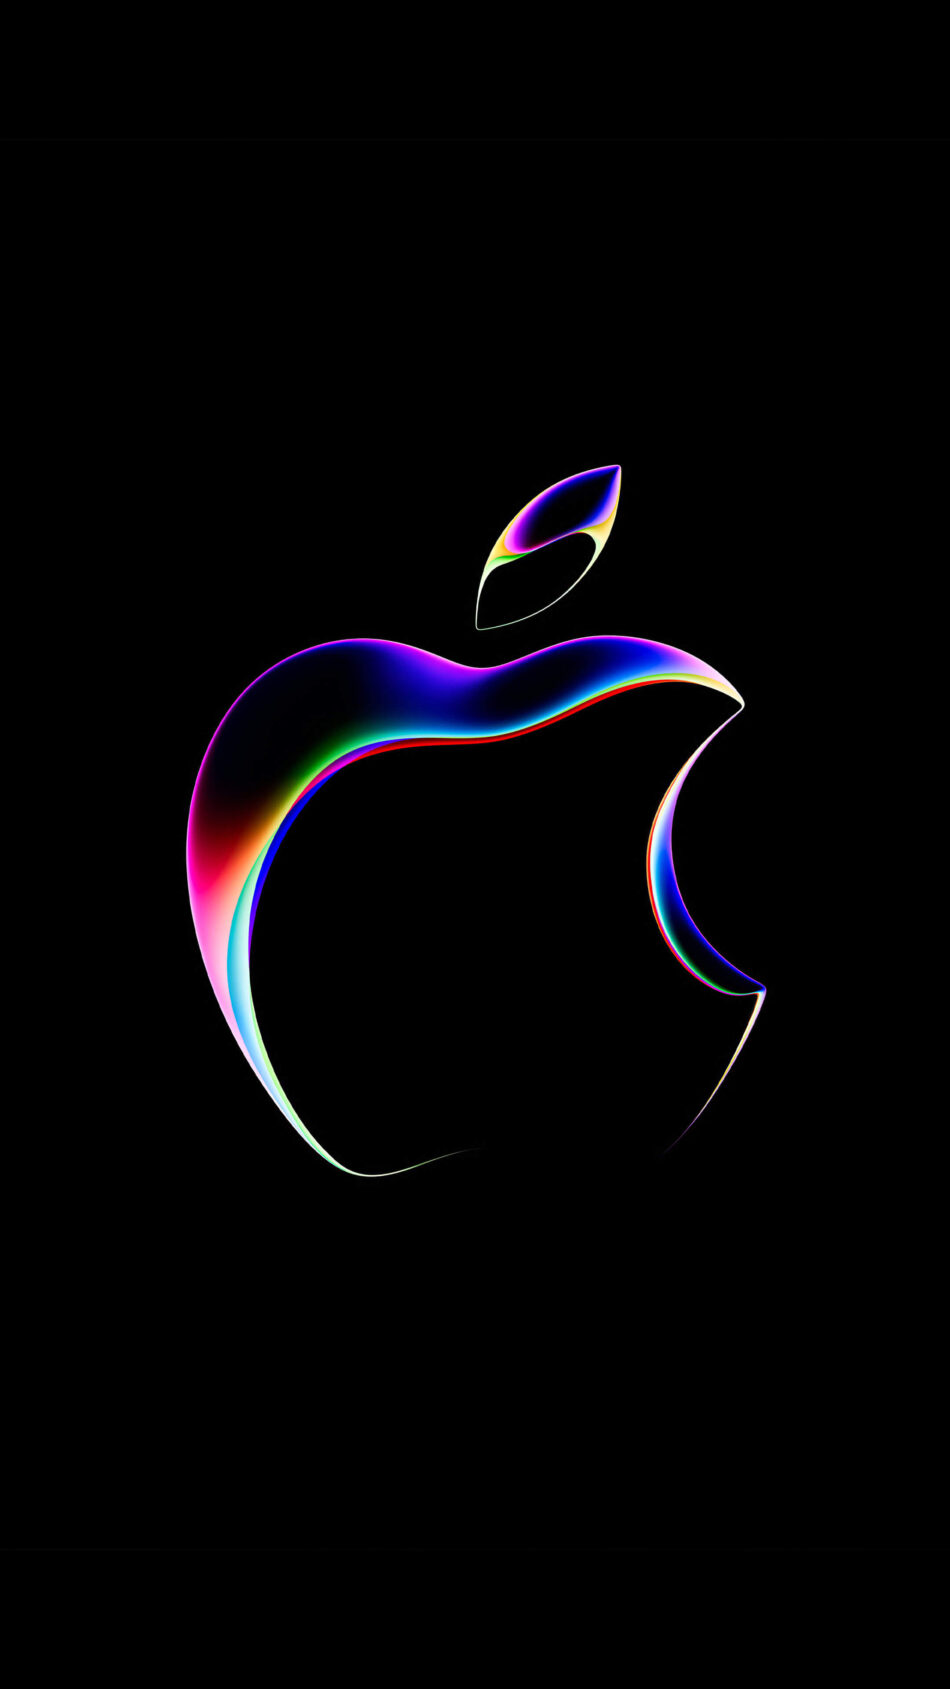 Apple Logo With Red Light Full HD - pling.com